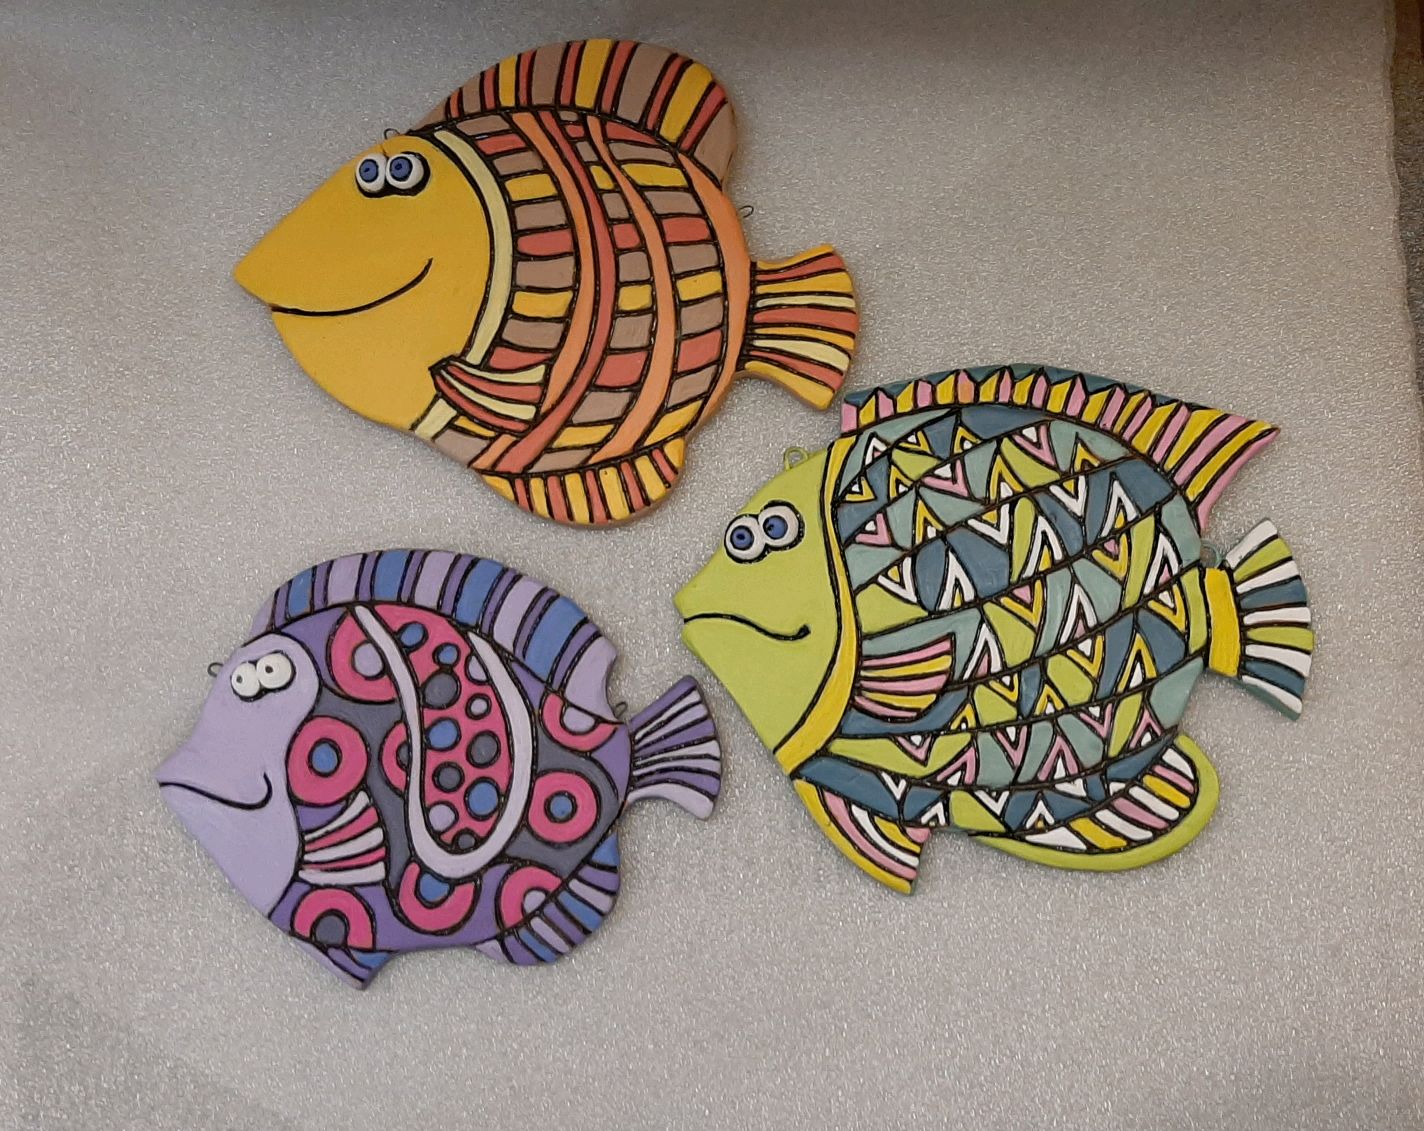 Раскраски Рыбы